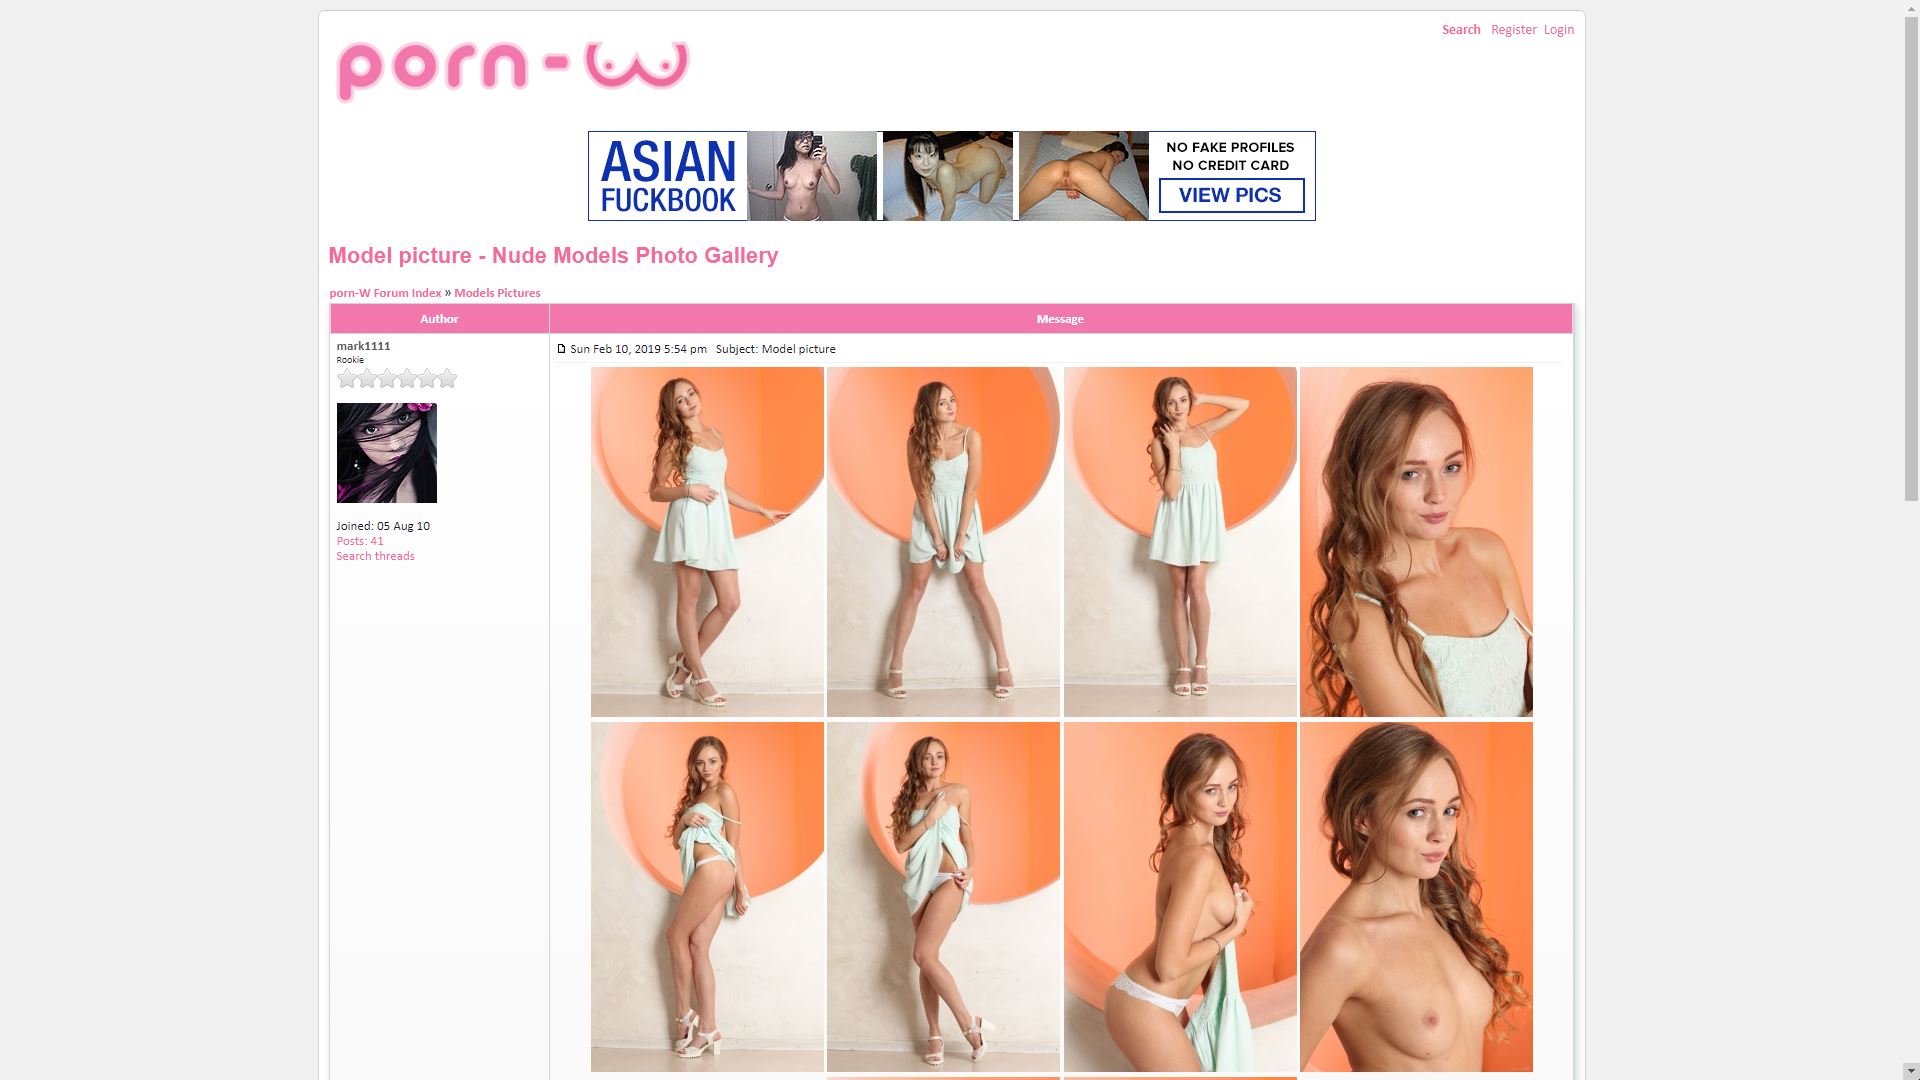 Asian Porn Forum - PornW (porn-w.org) Porn Forum Site, XXX Adult Forum